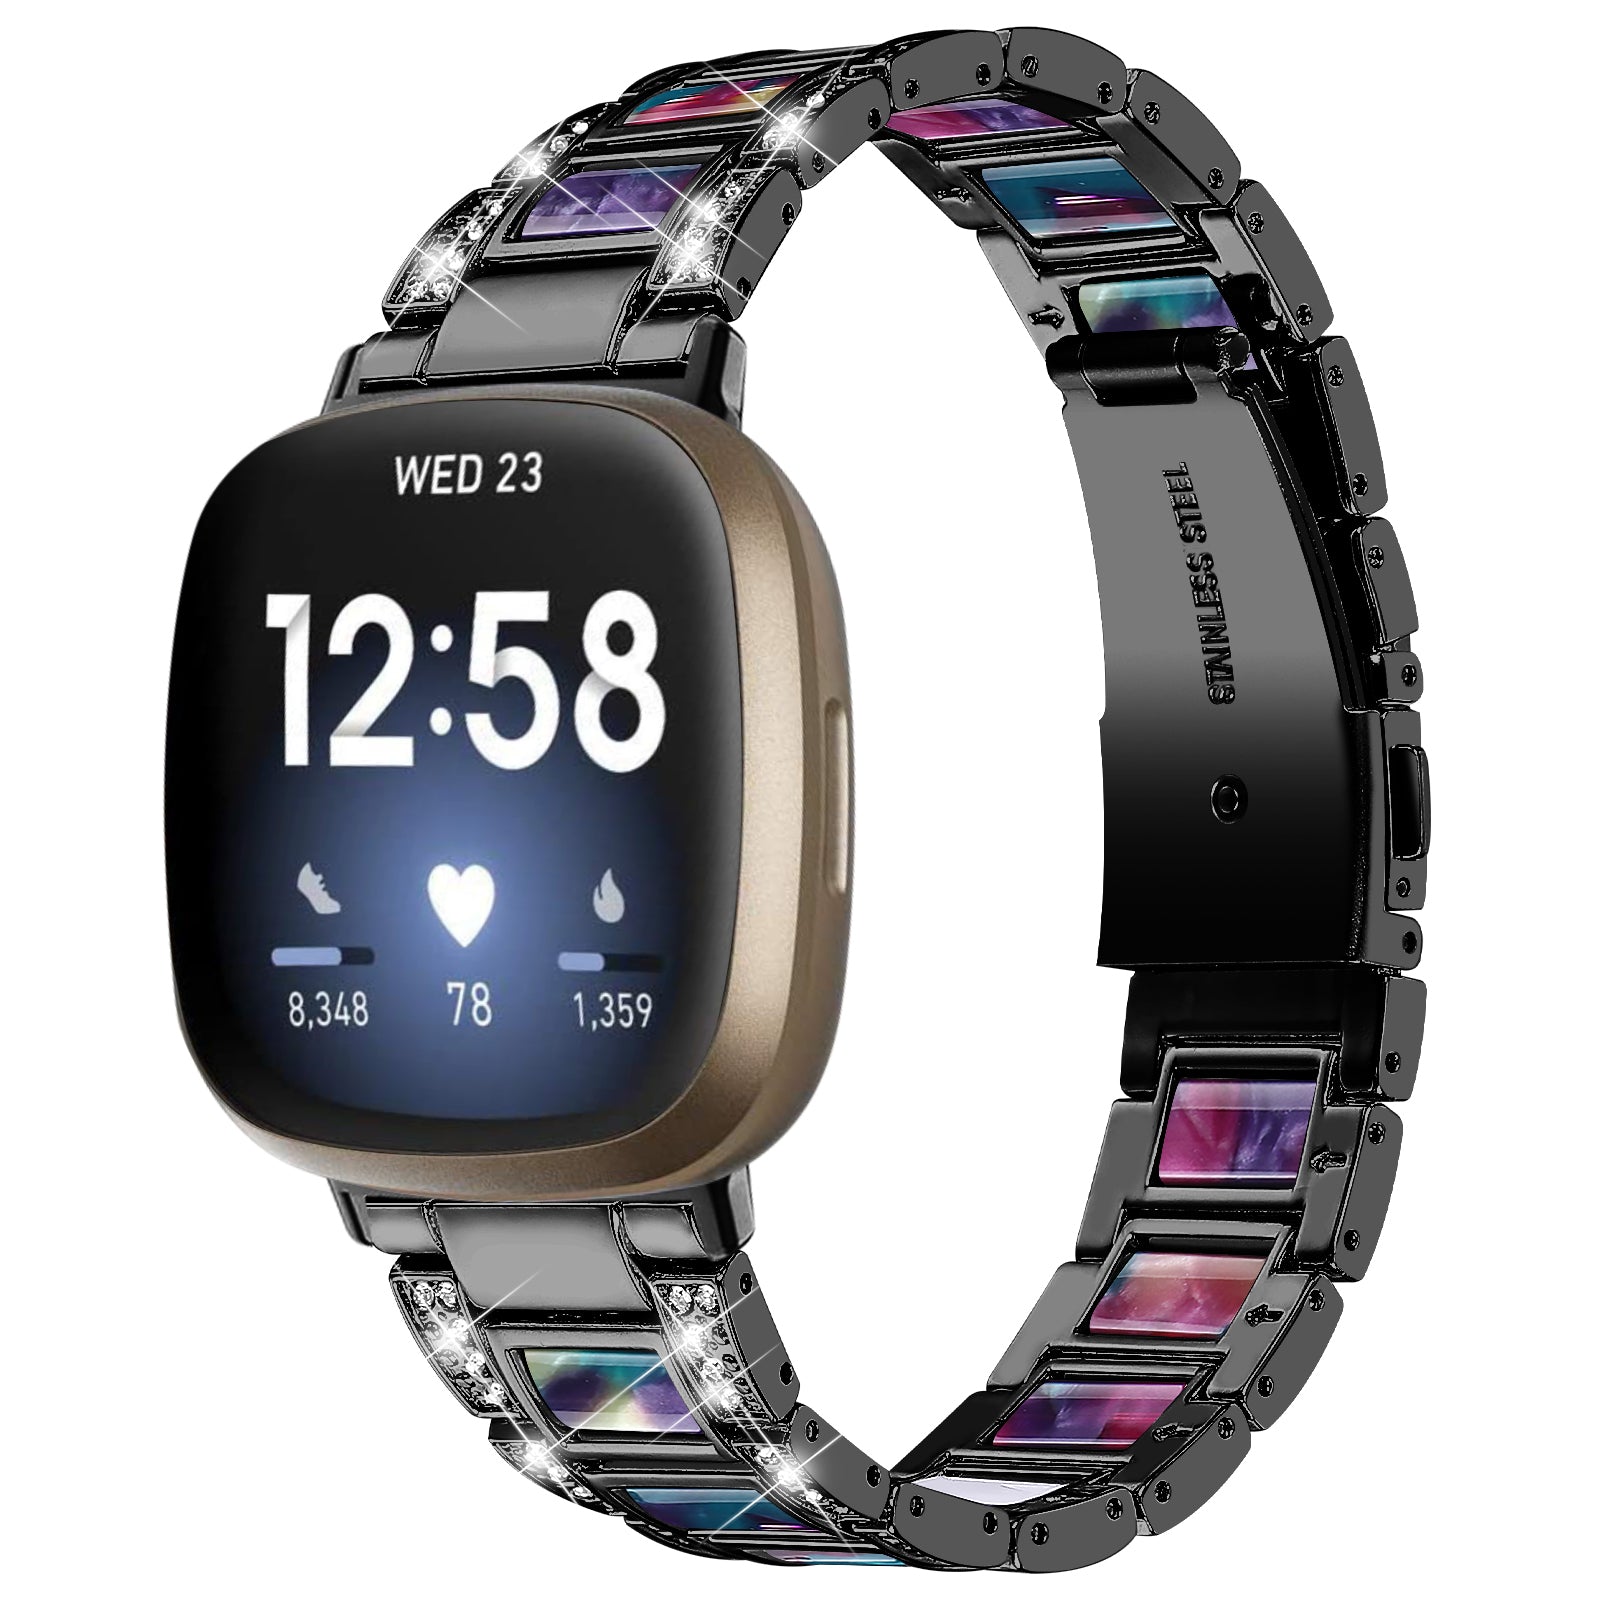 For Fitbit Versa 3 / Sense Stainless Steel Resin Smart Watch Band Replacement Rhinestone Decor Fashionable Wrist Strap - Black / Purple Green Mix